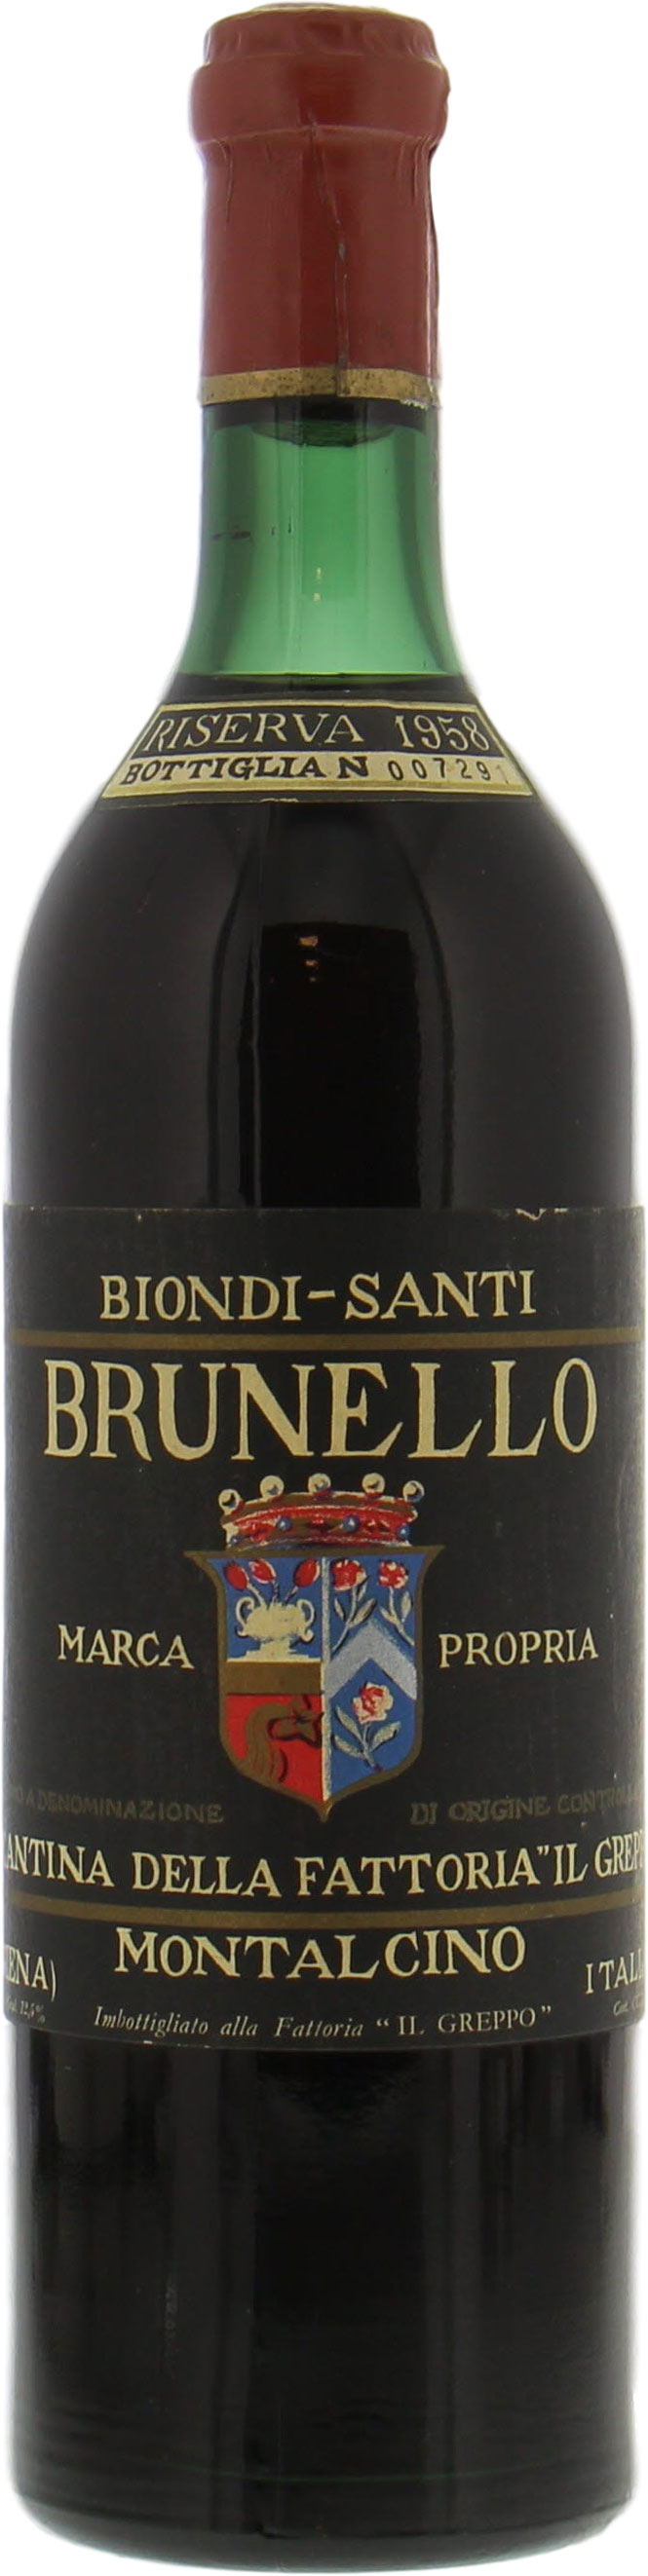 Biondi Santi - Brunello Riserva Greppo 1958 Top Shoulder